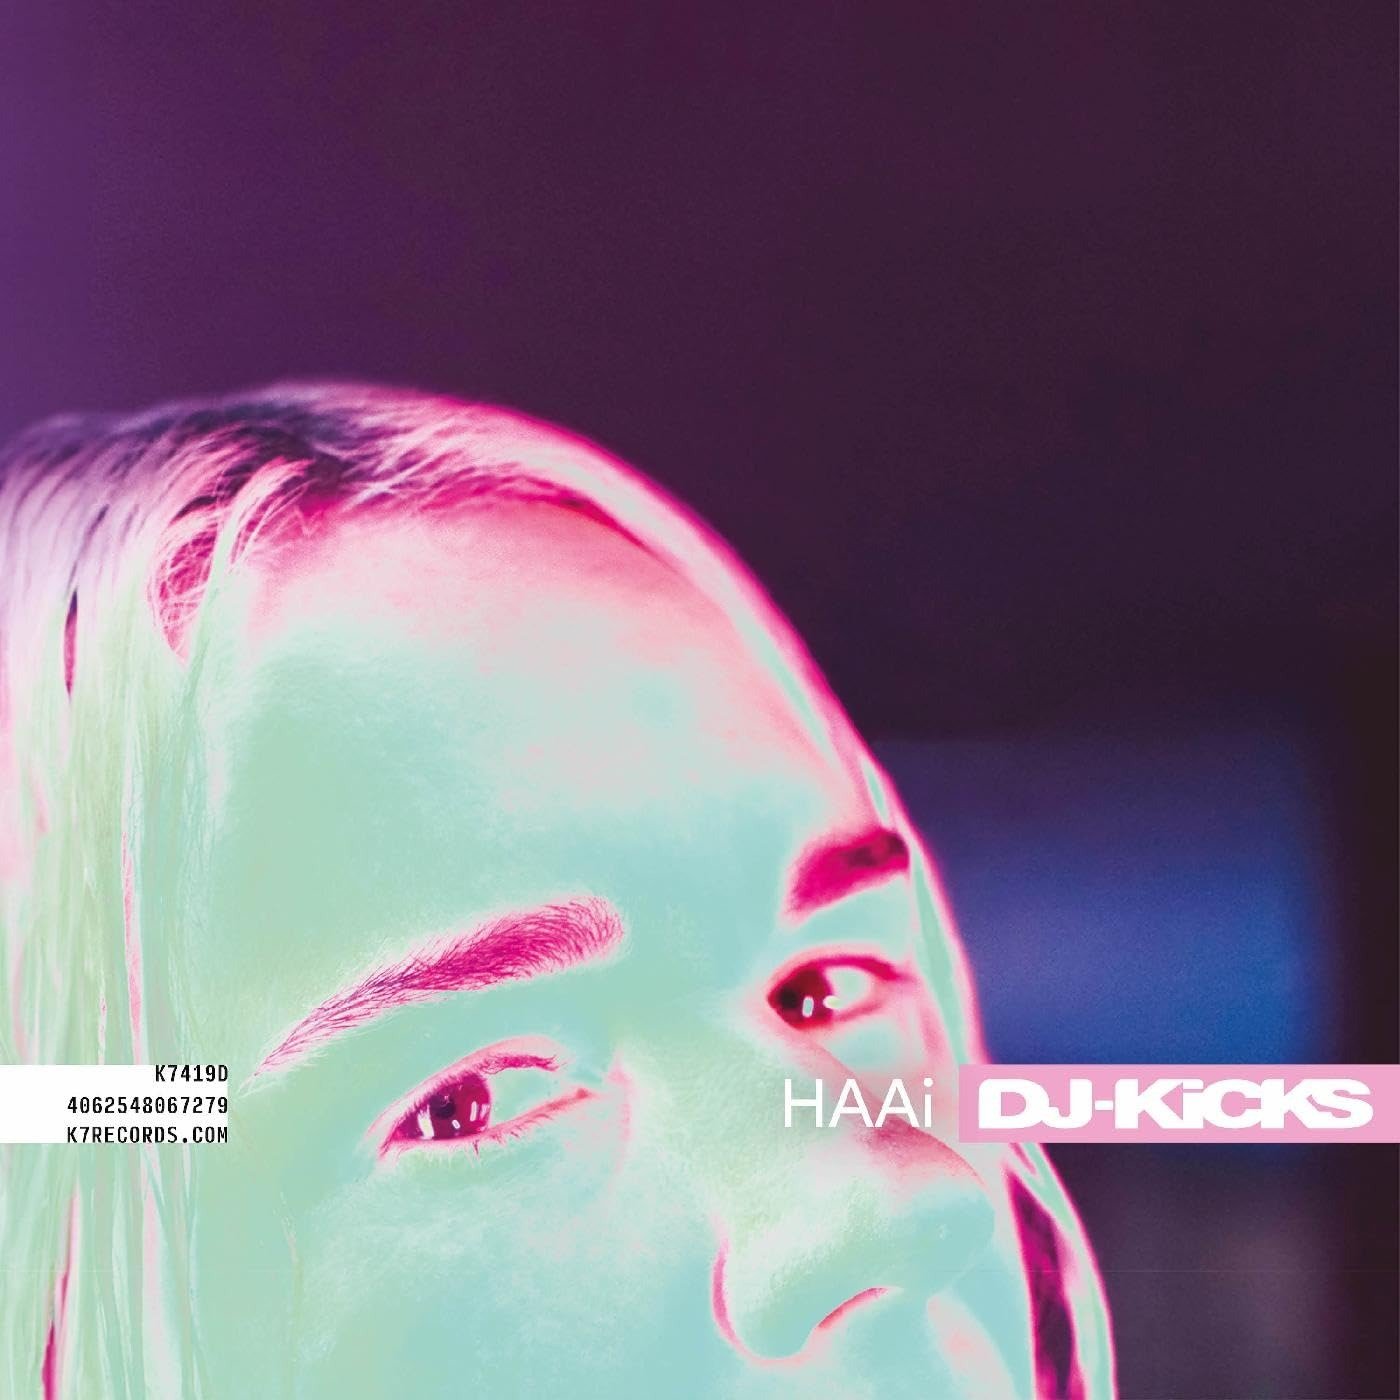 CD Shop - HAAI DJ-KICKS: HAAI